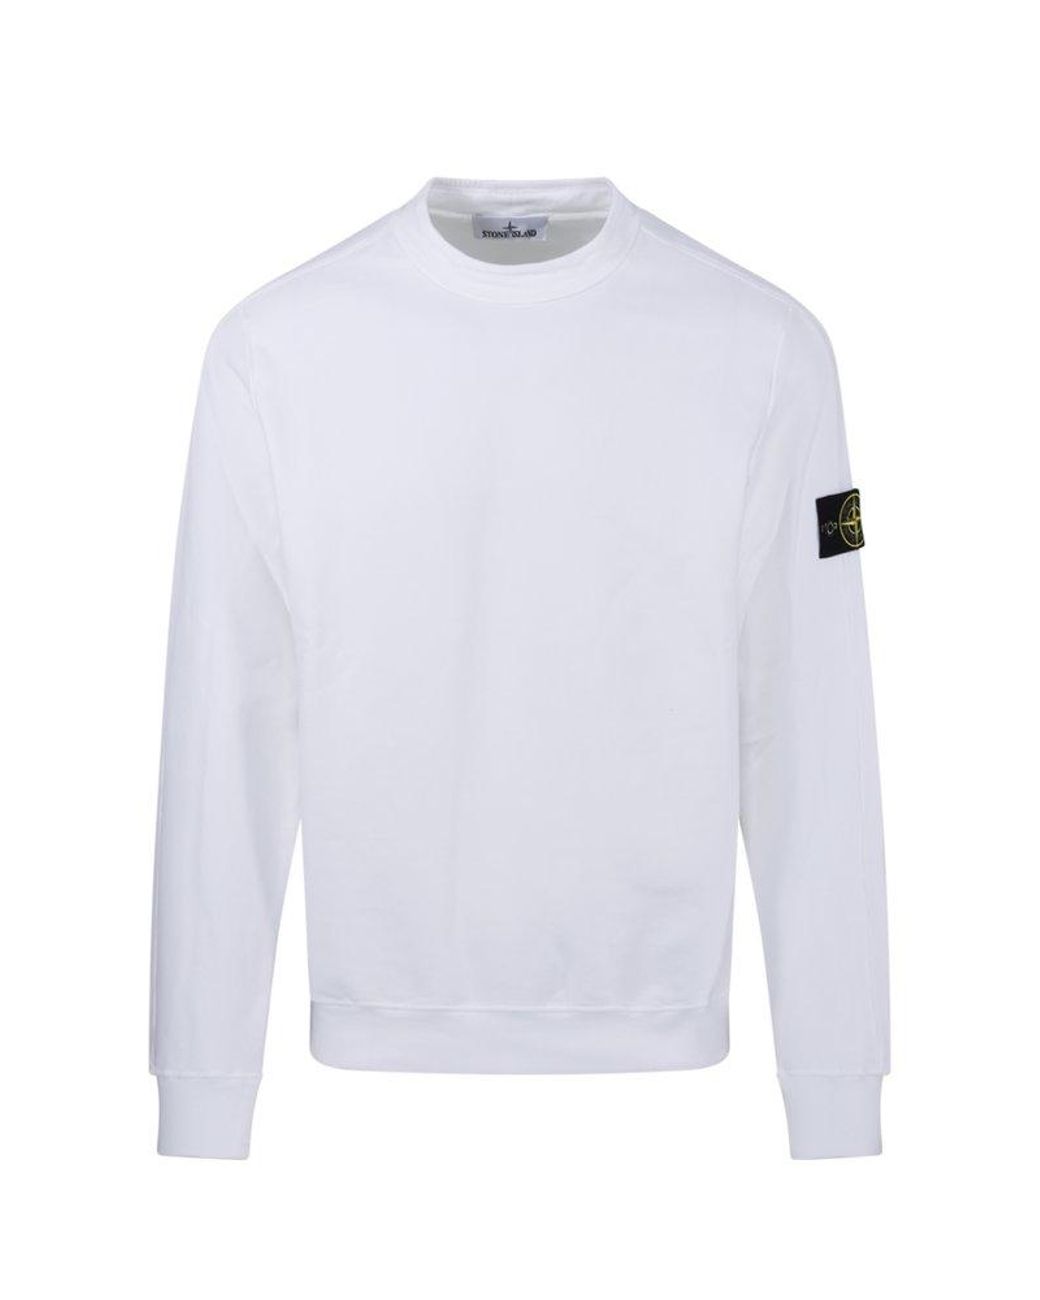 Stone Island Logo Patch Crewneck Sweatshirt in White for Men | Lyst